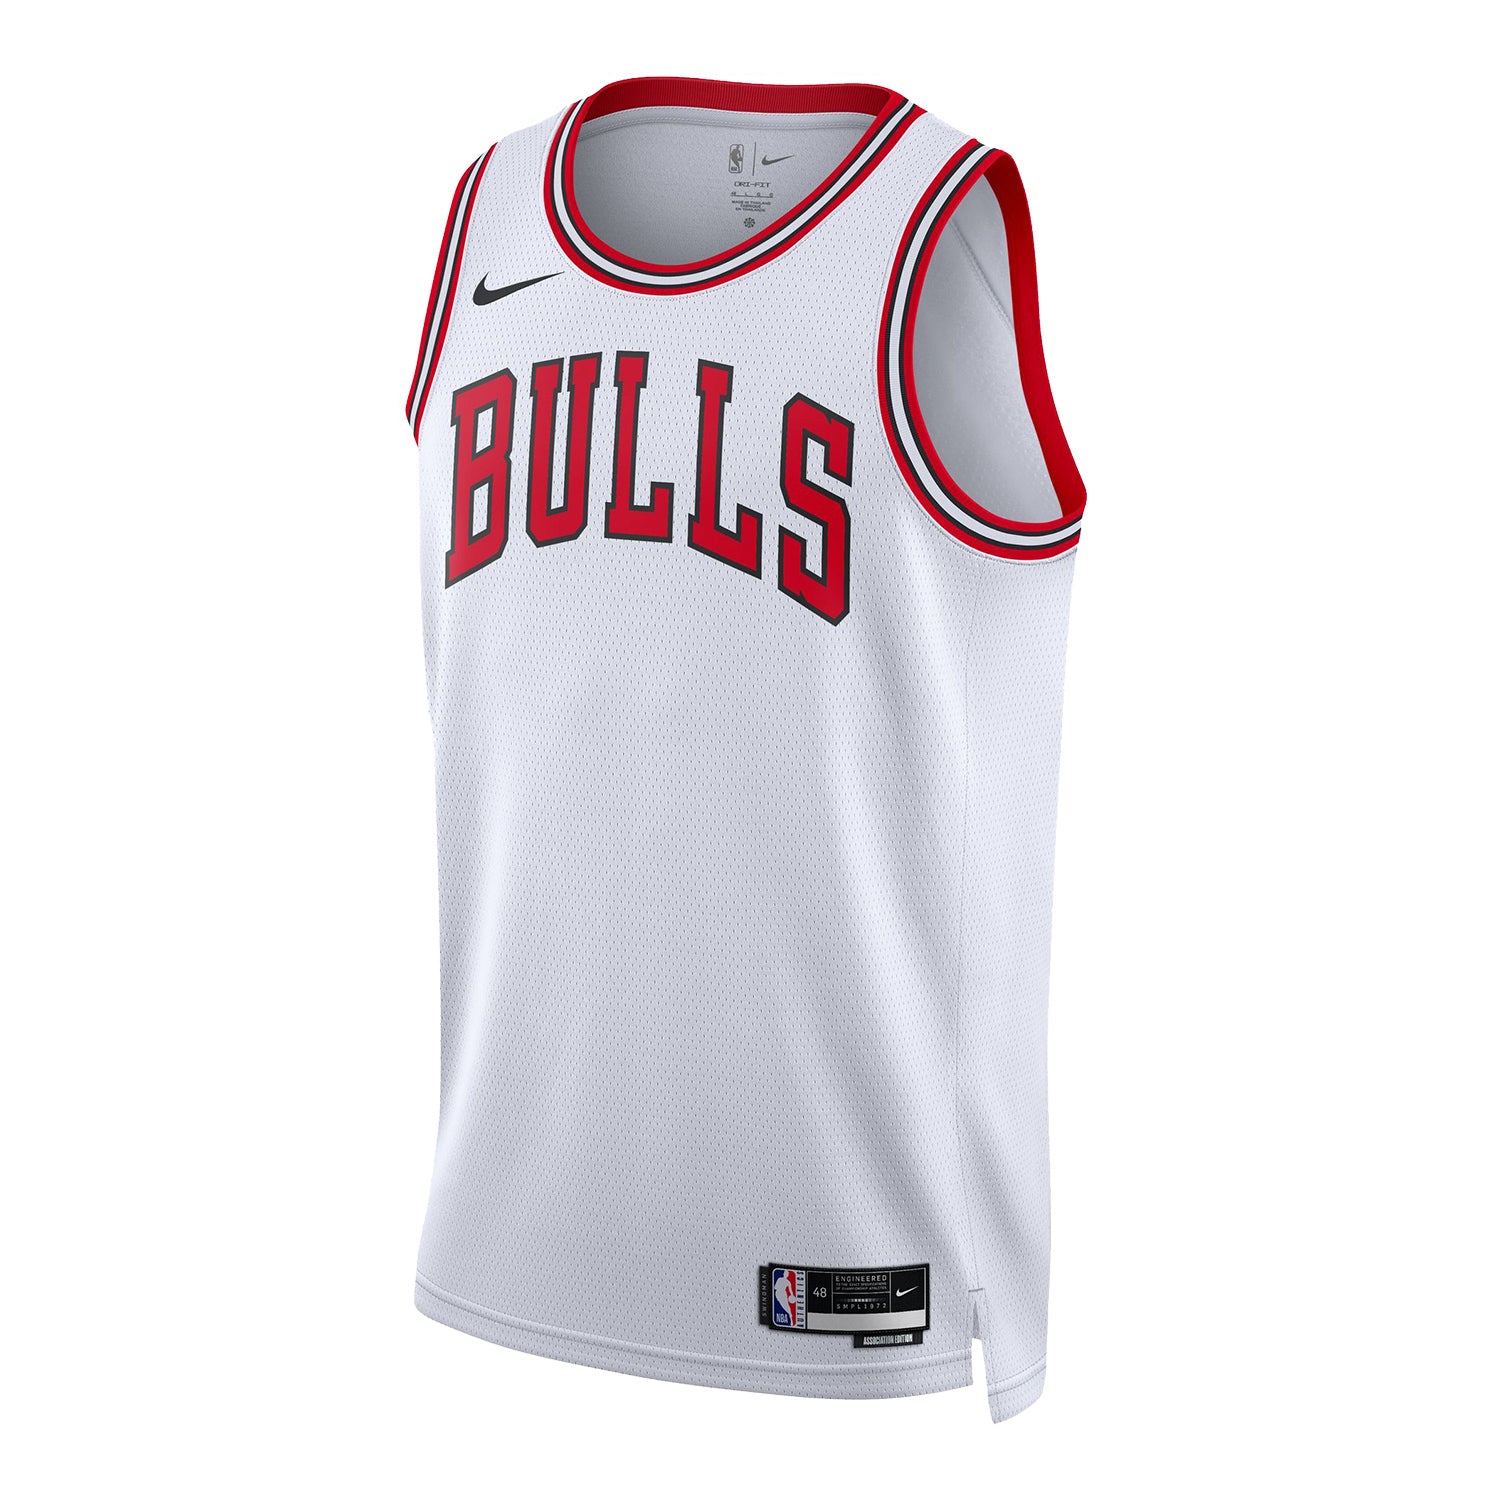 Michael Air Jordan 23 Chicago Bulls Hoodie Jersey Gray Red Black & White, 2x